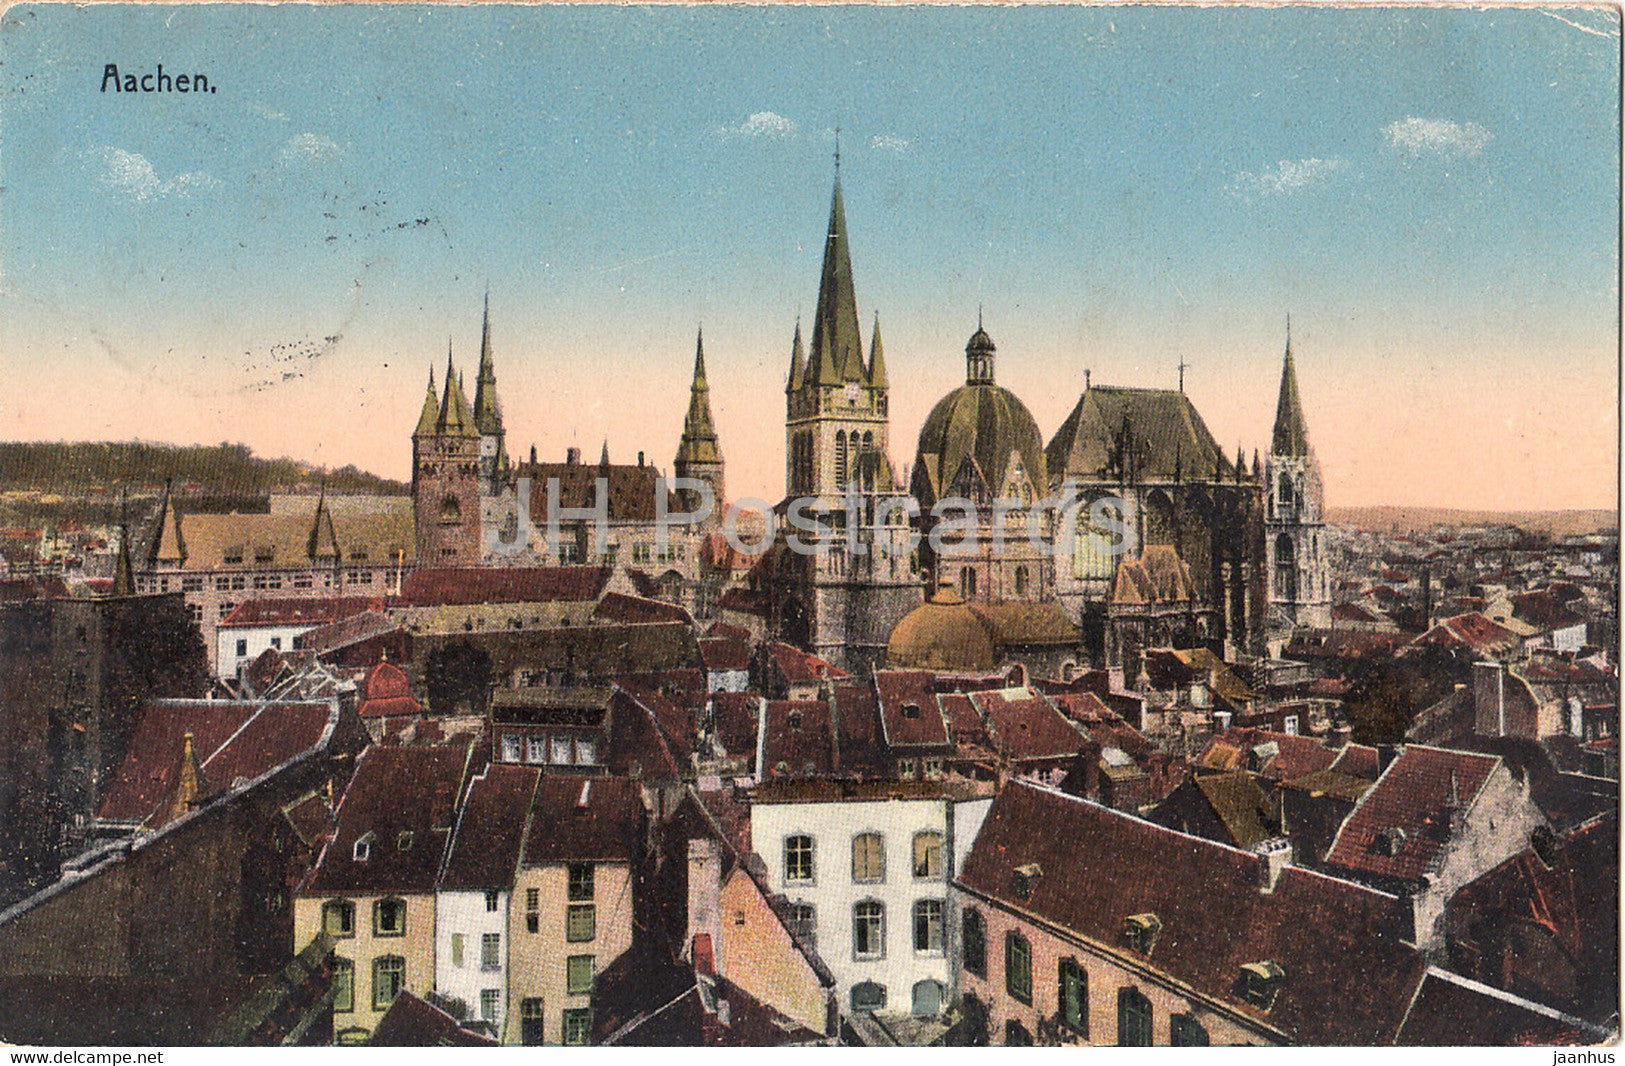 Aachen - Feldpost - old postcard - 1915 - Germany - used - JH Postcards